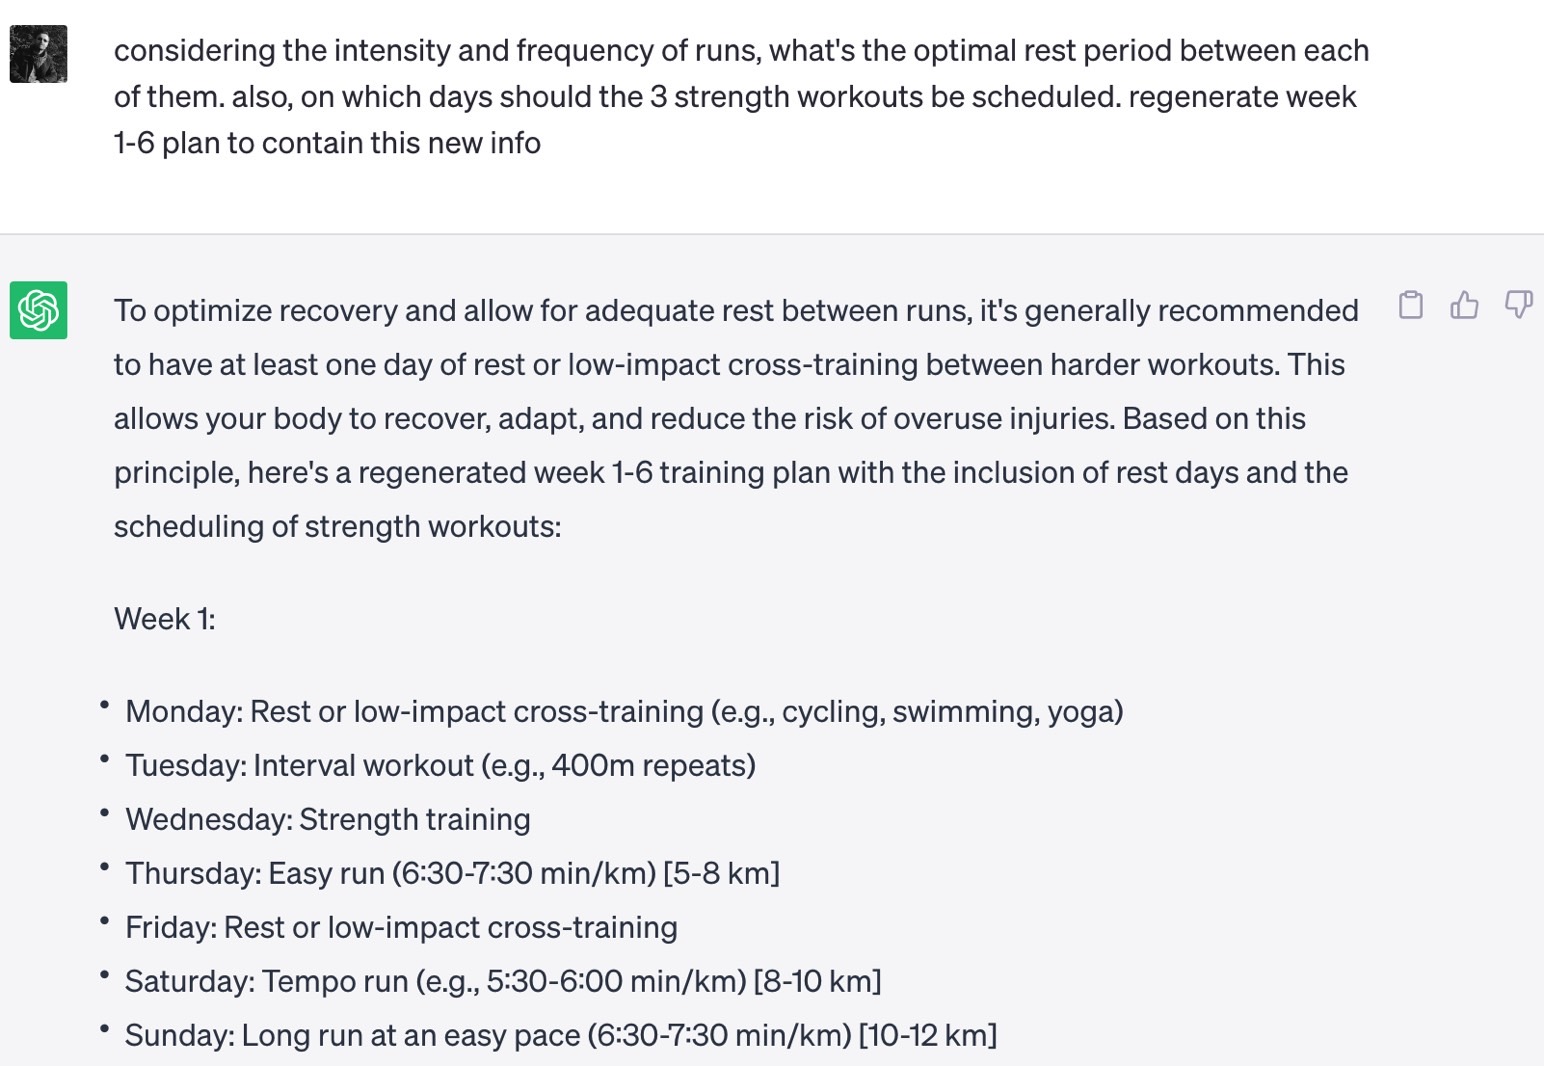 ChatGPT adapted the half-marathon training regimen to improve rest periods.